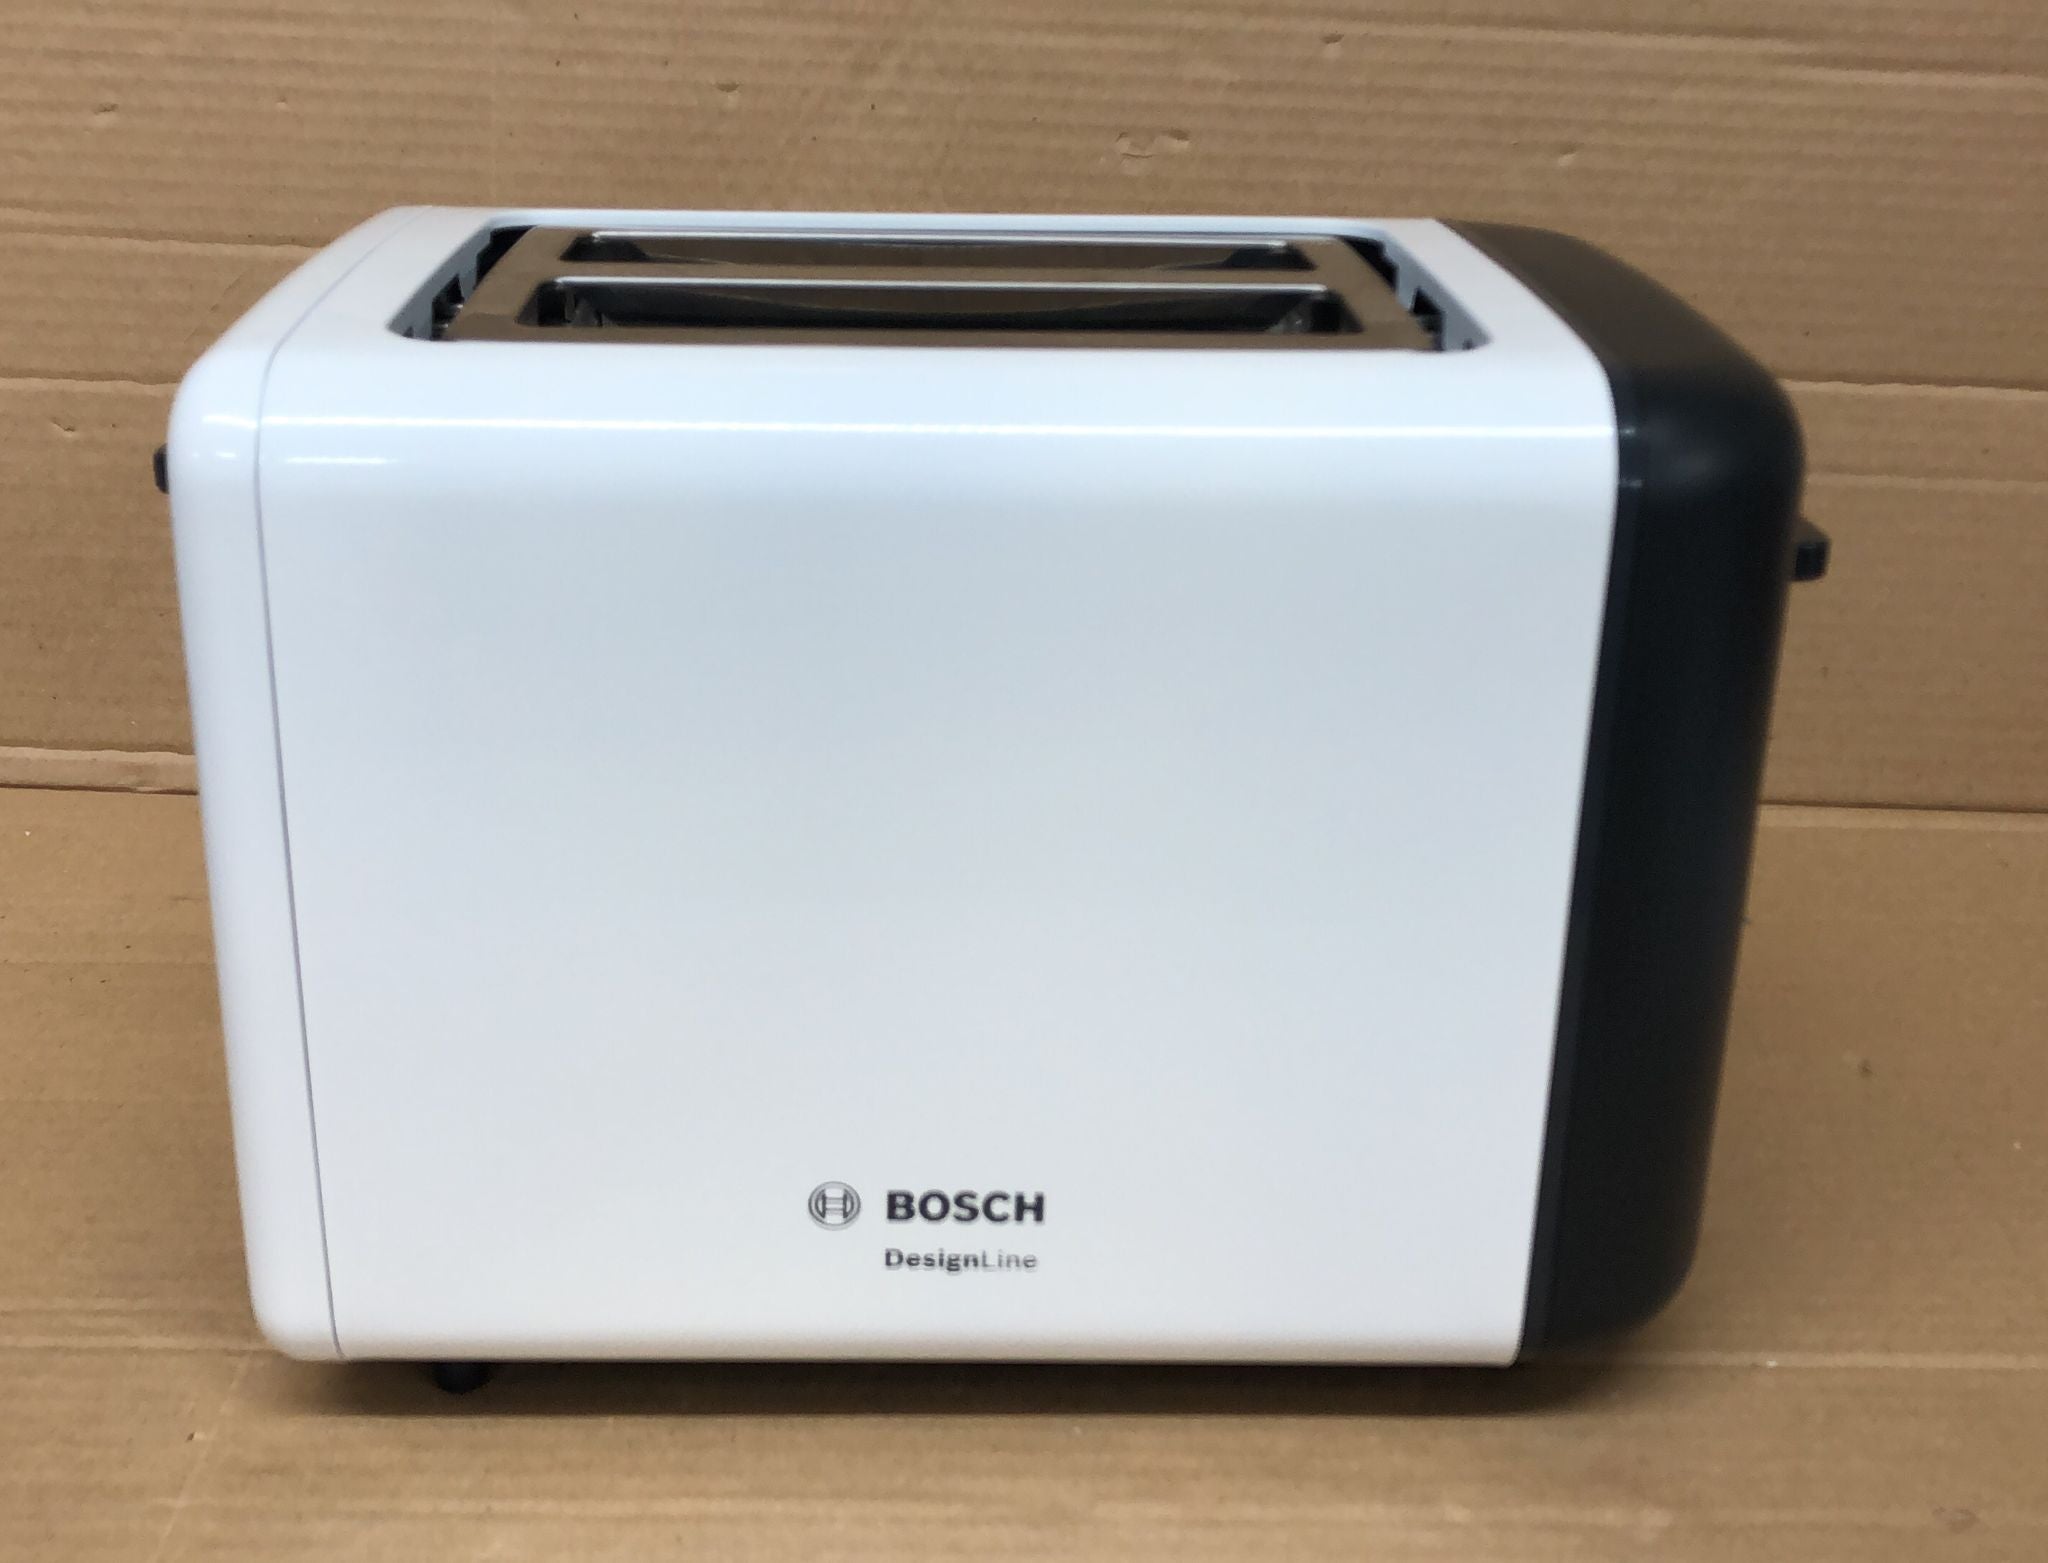 Bosch TAT3P421GB DesignLine Toaster, Stainless Steel, 970 W, White-2446